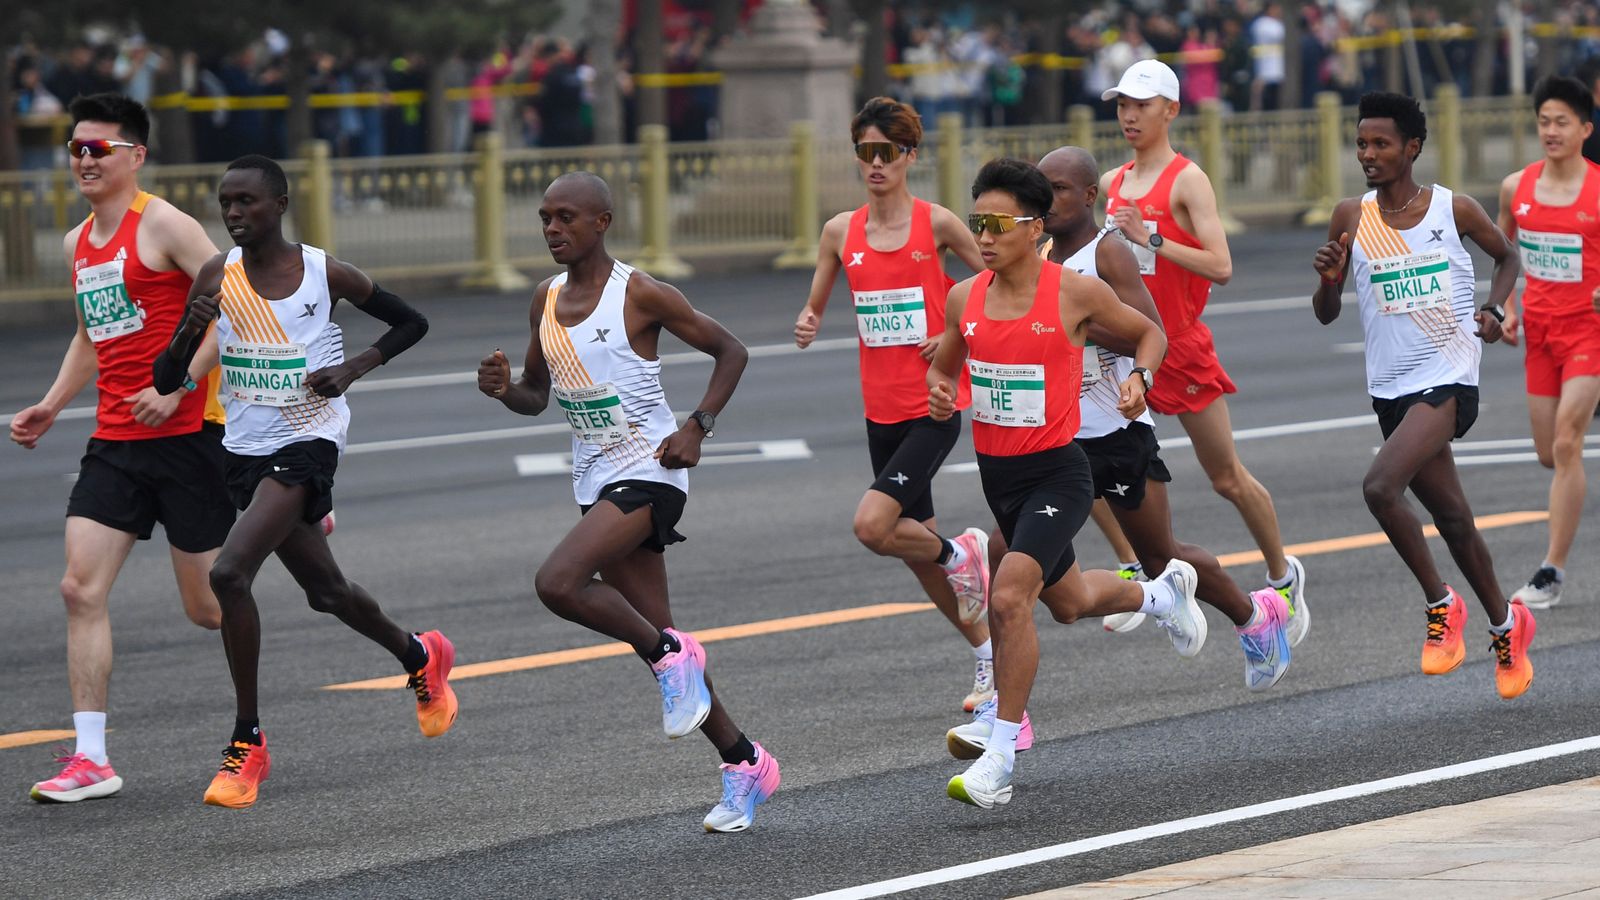 beijing half marathon winner stripped of medal after investigation into bizarre finish